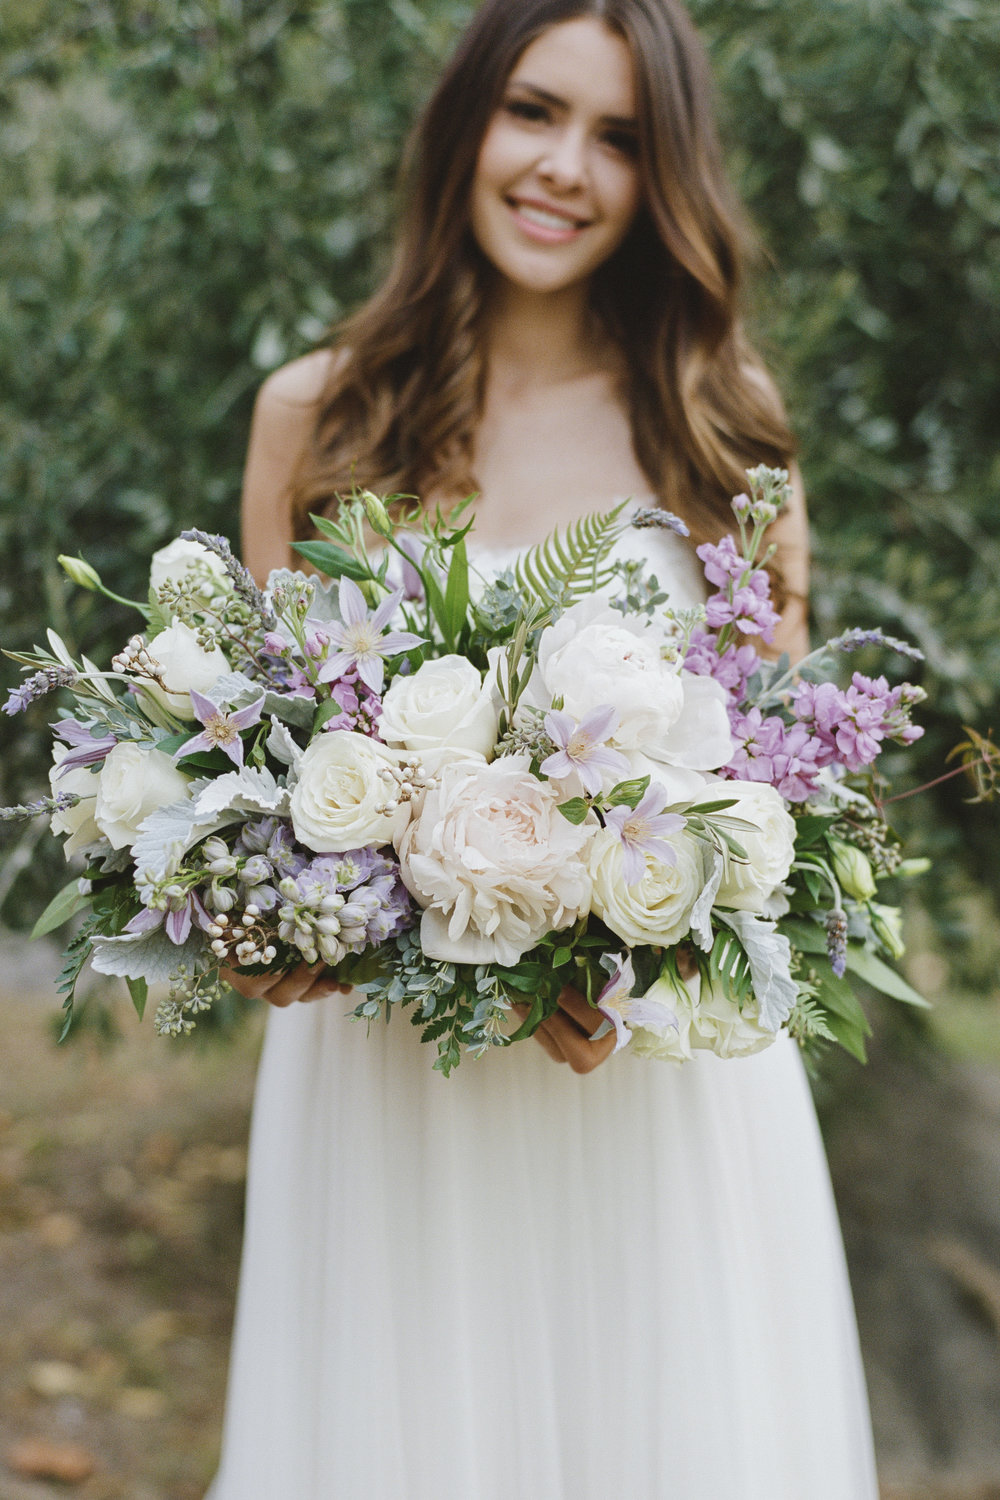 Violette-fleurs-roseville-sacramento-california-Flower-farm-inn-luxury- upscale-wedding-florist-spring-bride-wedding-flowers-lavender-blus-clematis.jpg